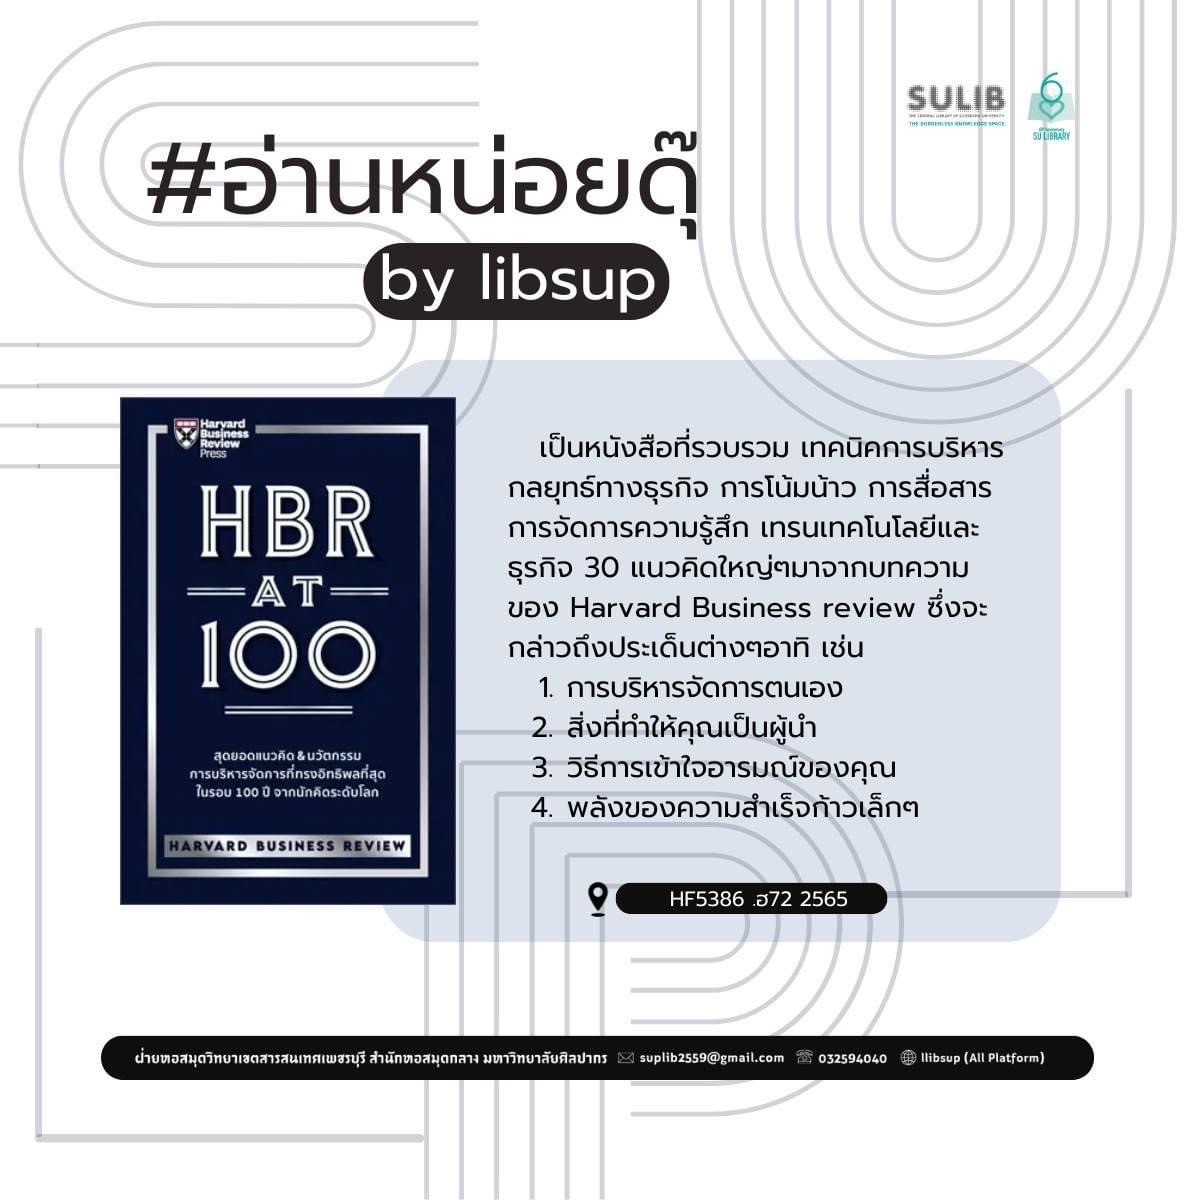 HBR AT 100 : สุดยอดแนวคิด&นวัตกรรมการบริหารจัดการที่ทรงอิทธิพลที่สุดในรอบ 100 ปี จากนักคิดระดับโลก = HBR at 100 : the most influential and innovative articles from Harvard Business Review’s first century